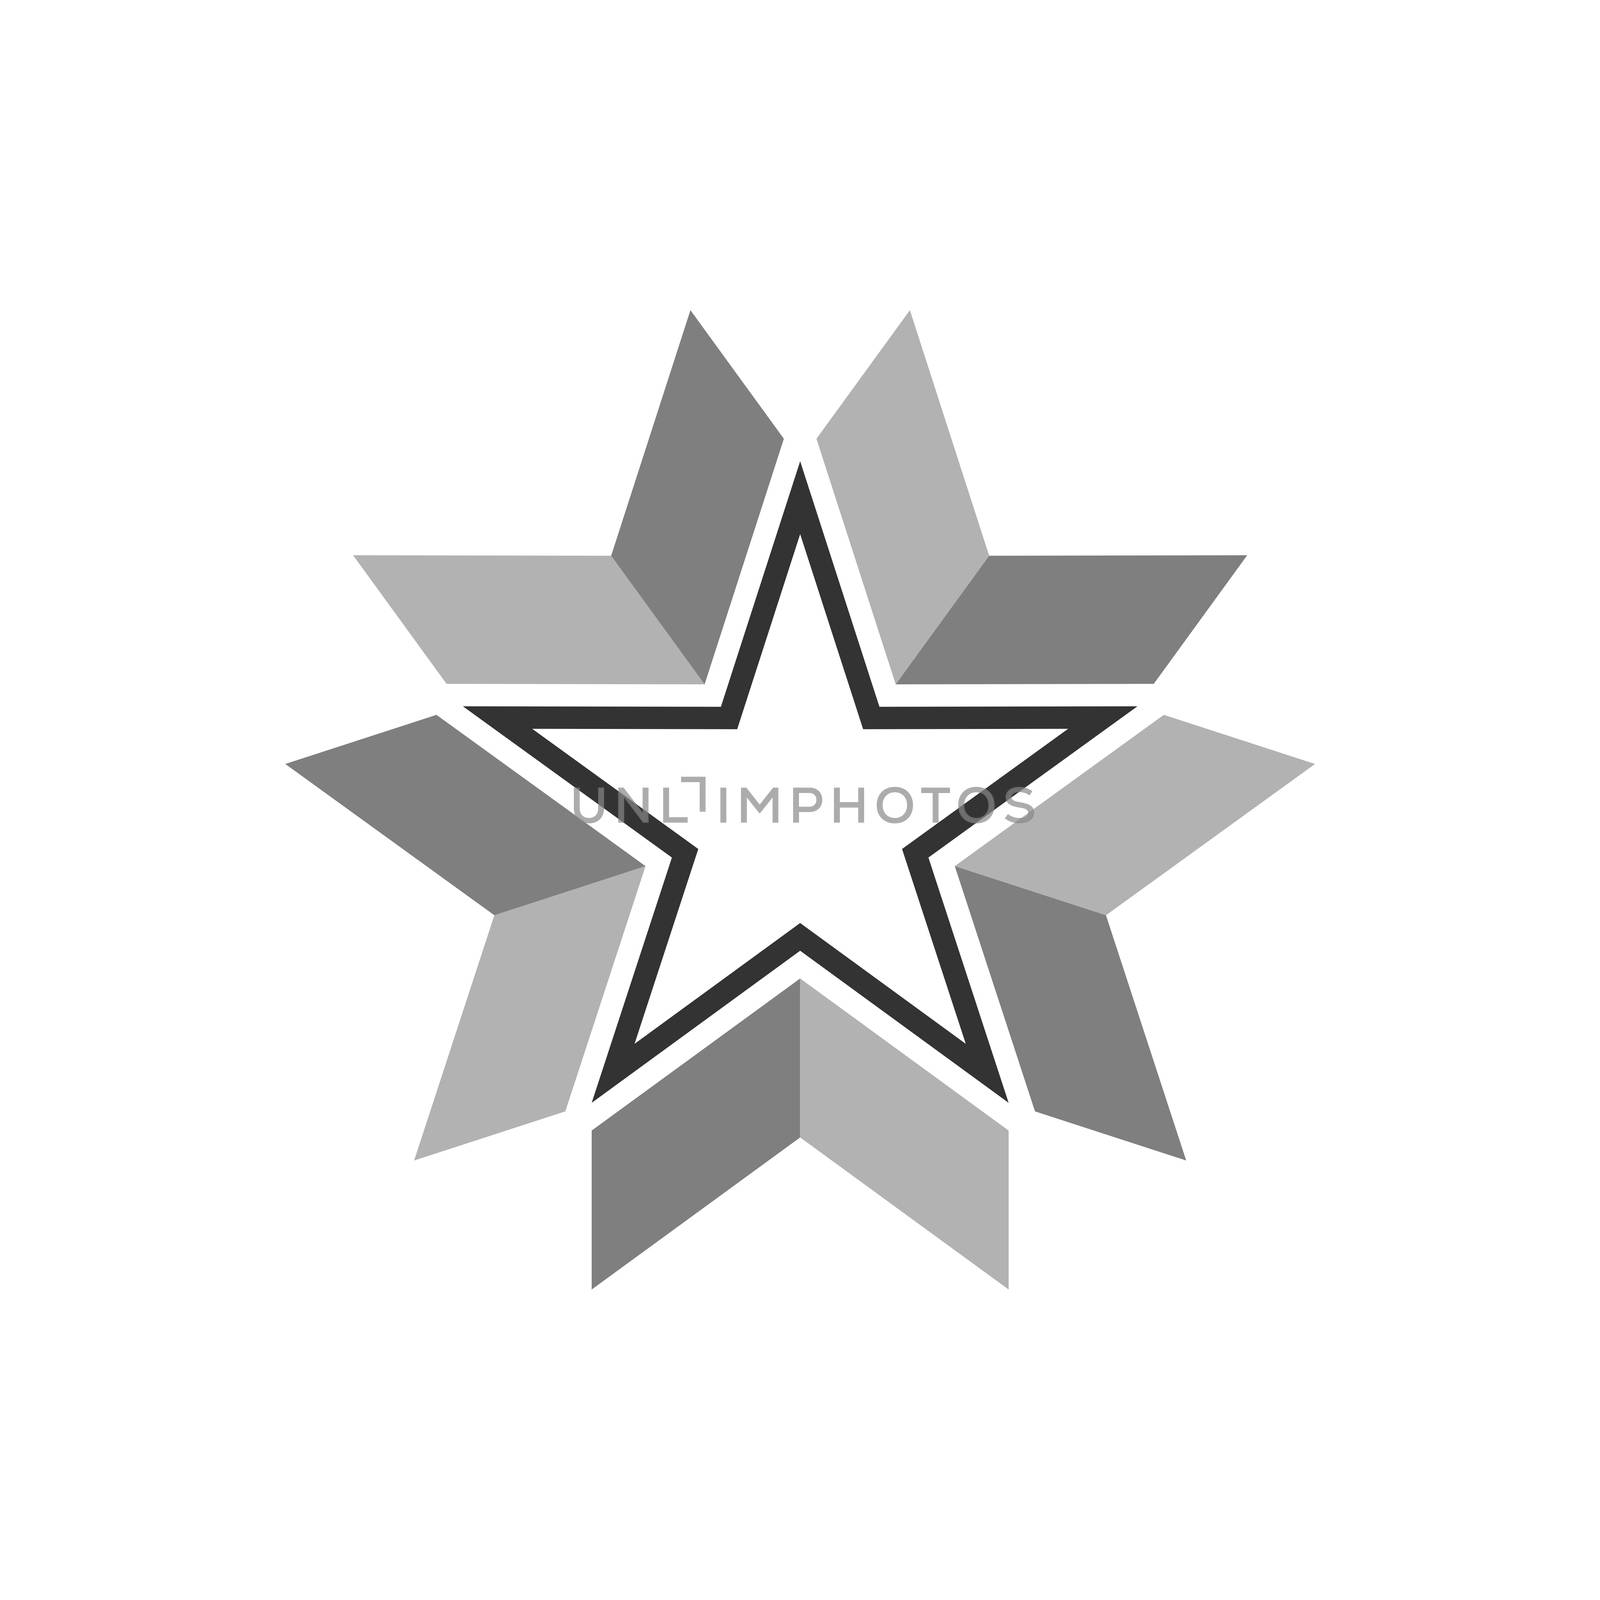 Grey Star and Arrow Logo Template Illustration Design EPS 10 by soponyono1